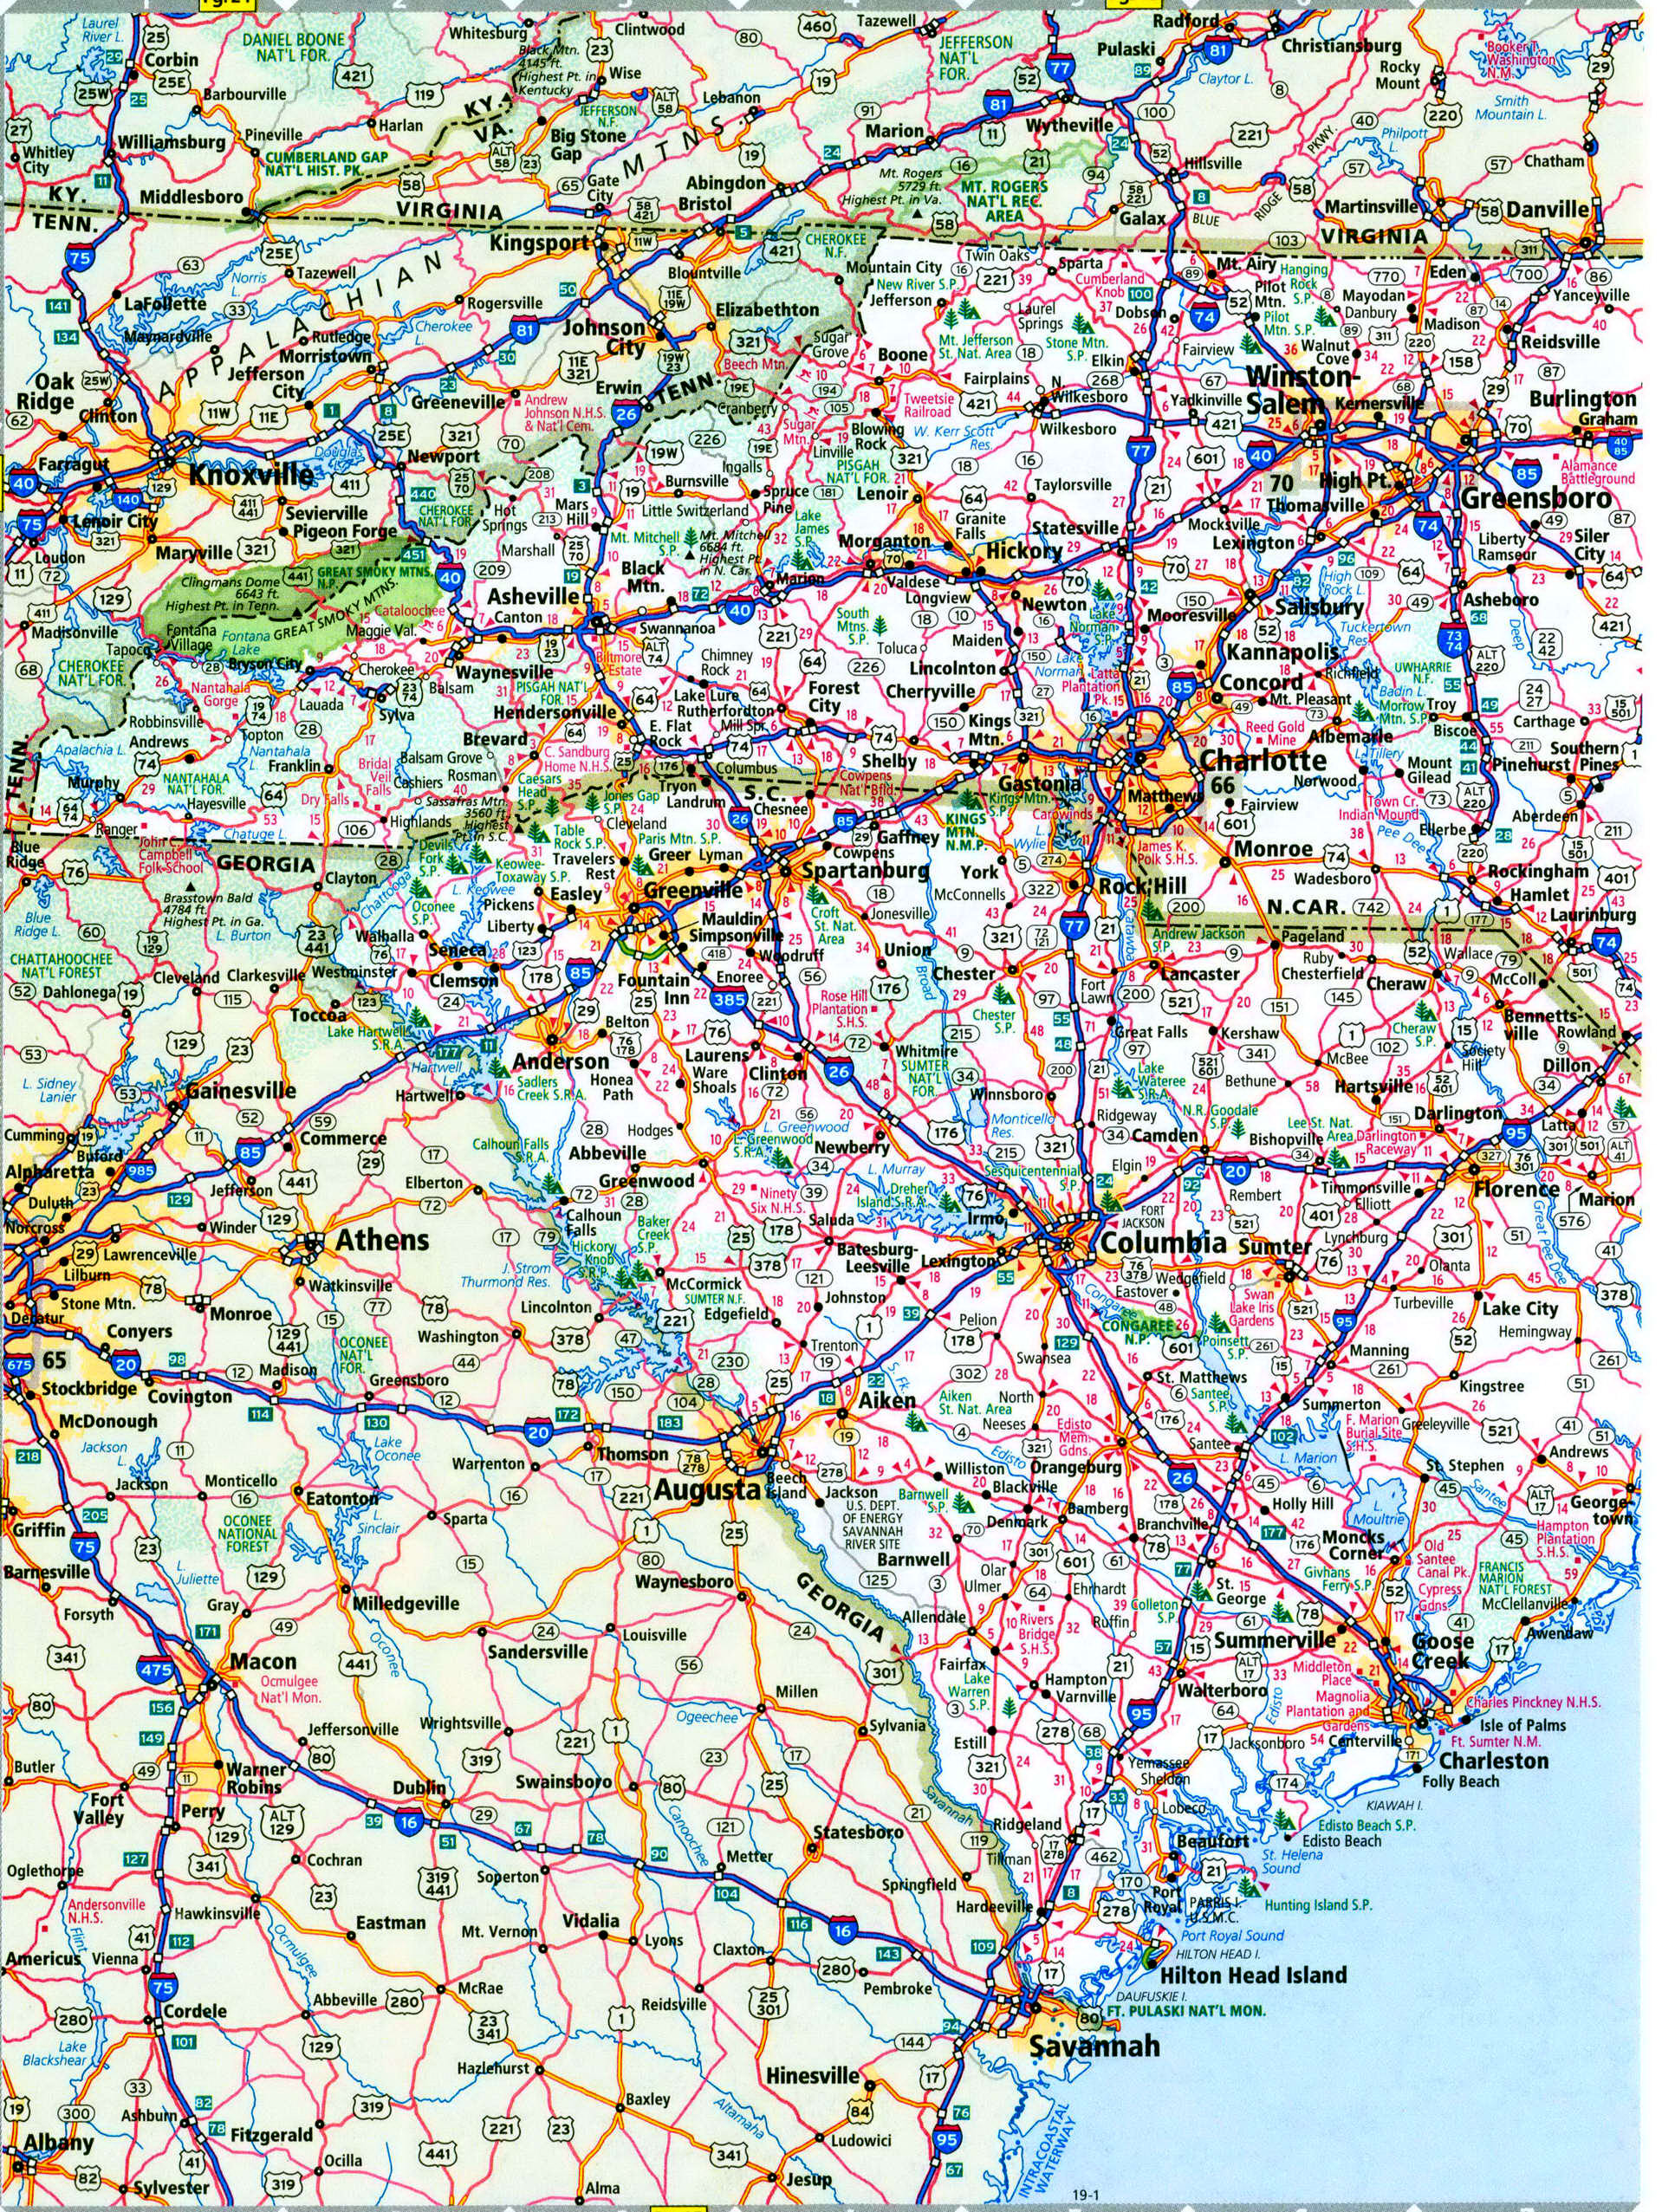 South Carolina interstate highway map